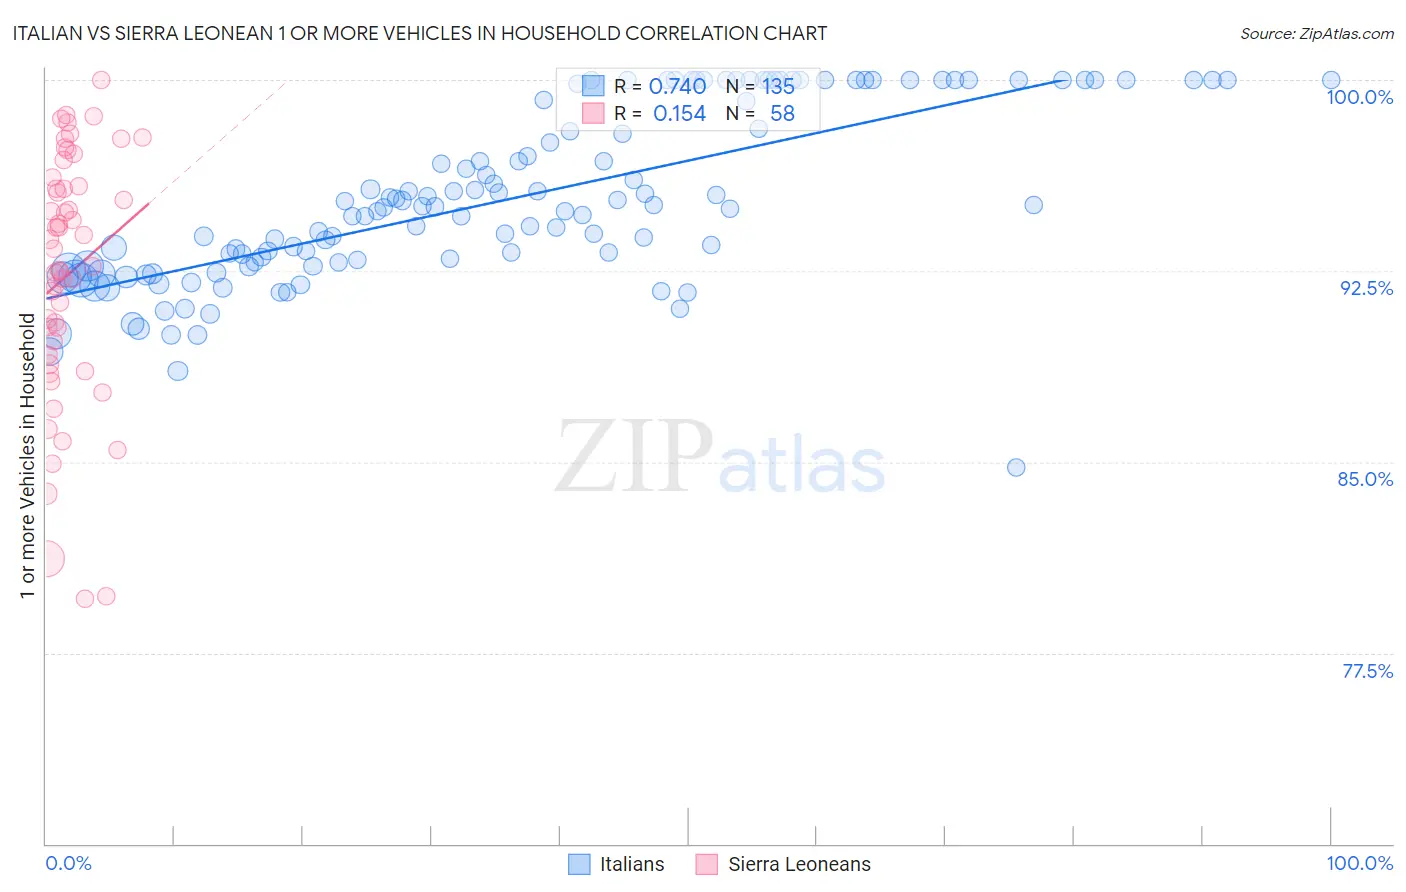 Italian vs Sierra Leonean 1 or more Vehicles in Household